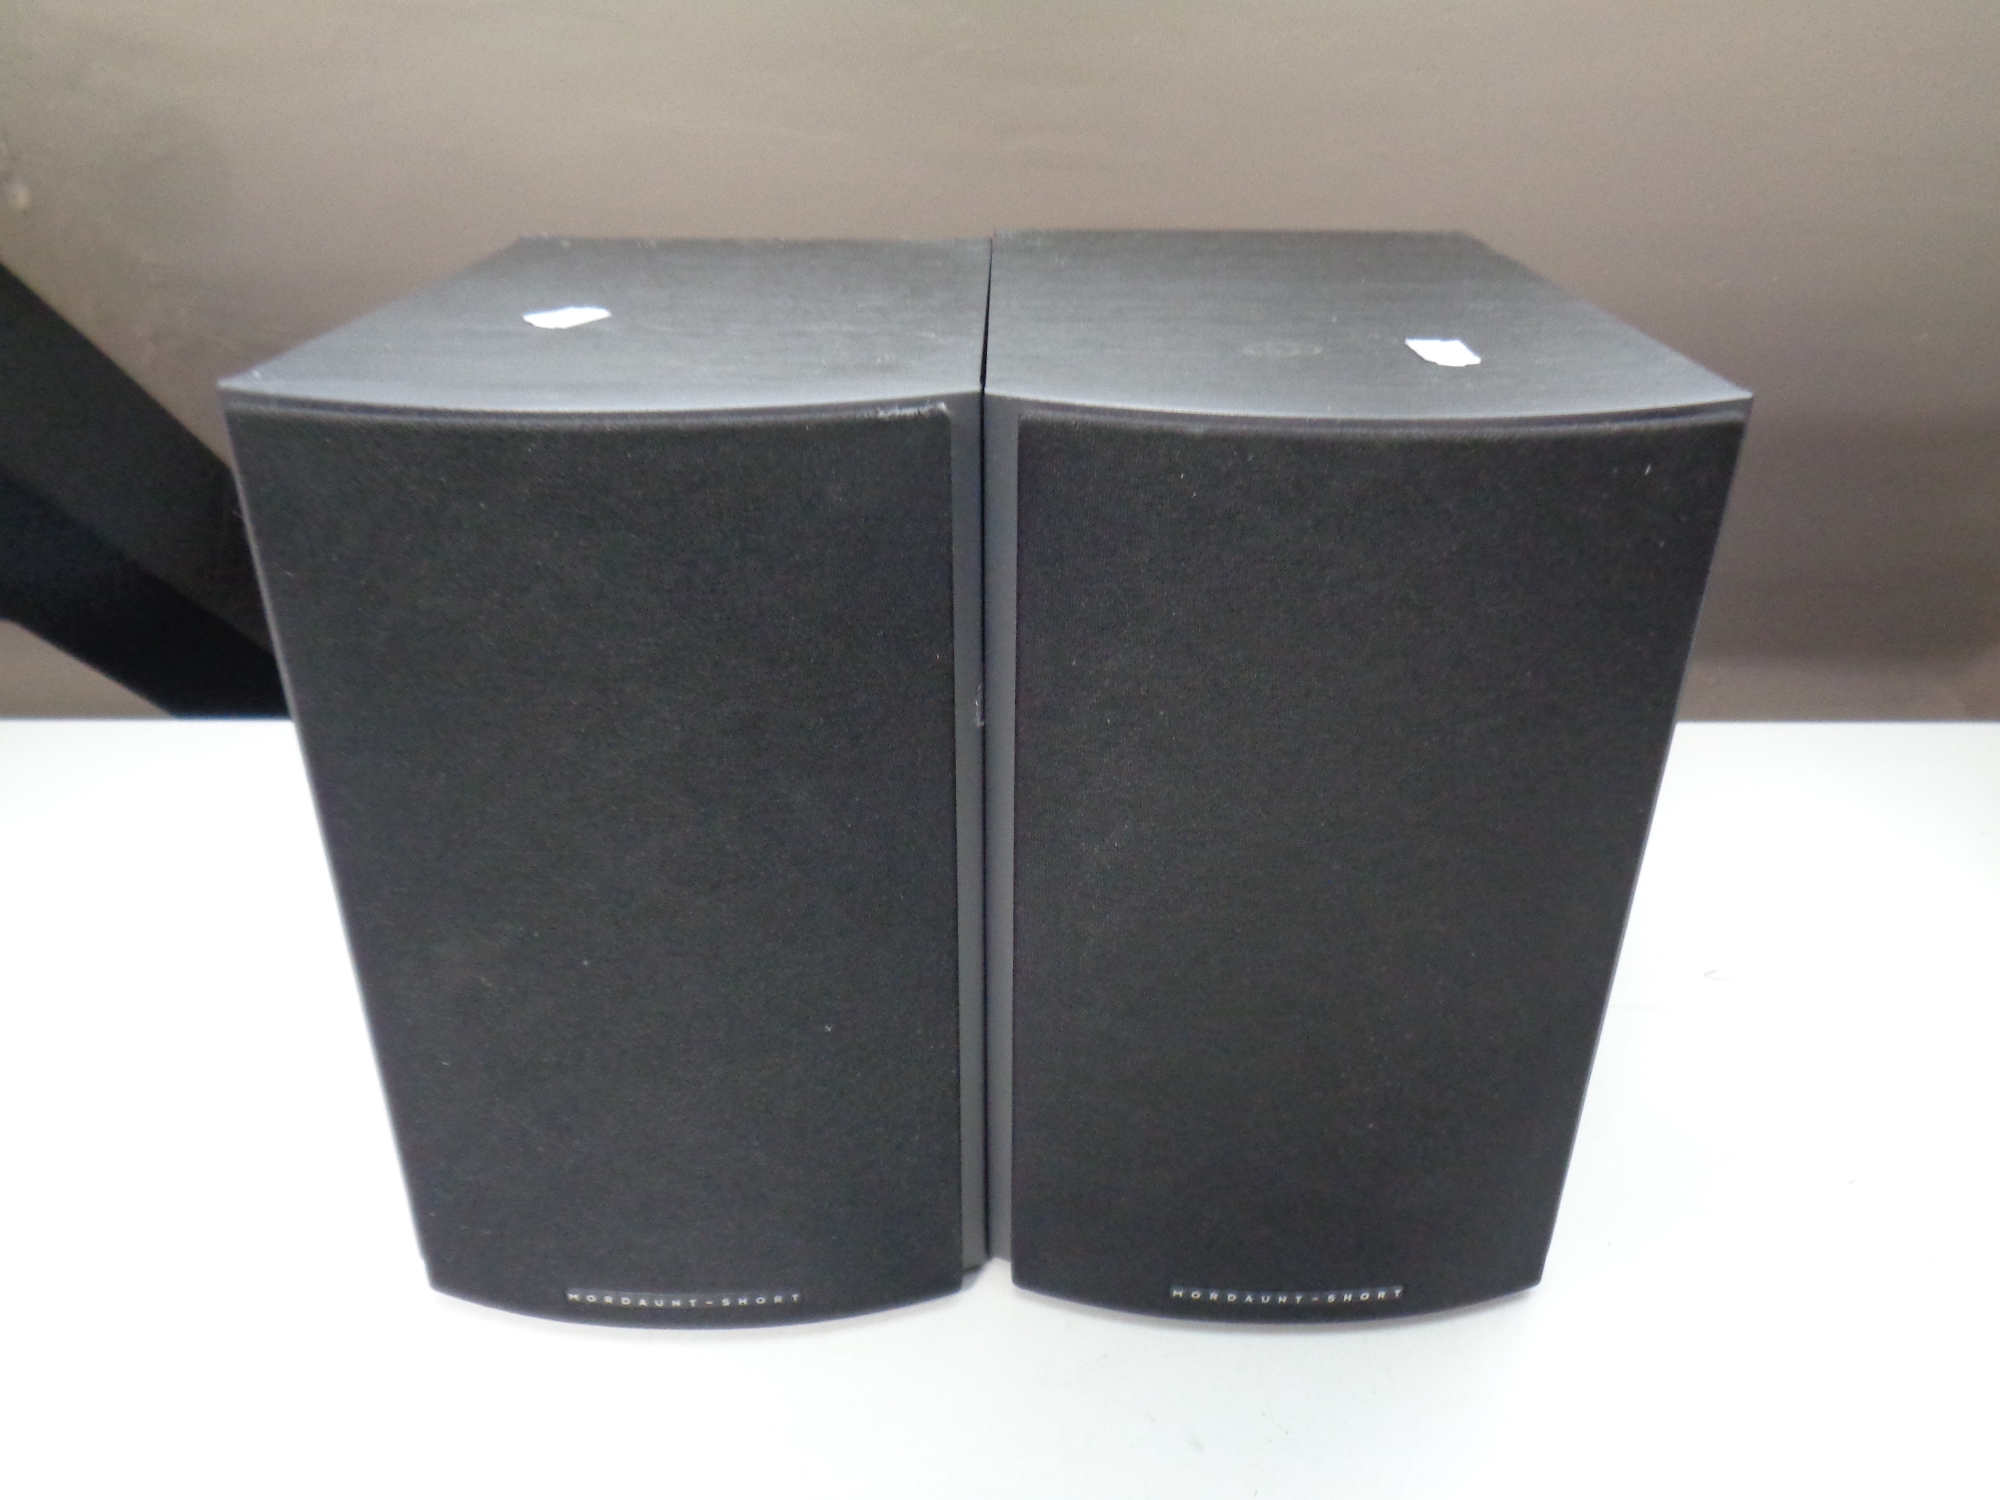 A pair of Mordaunt Short speakers on speaker stands